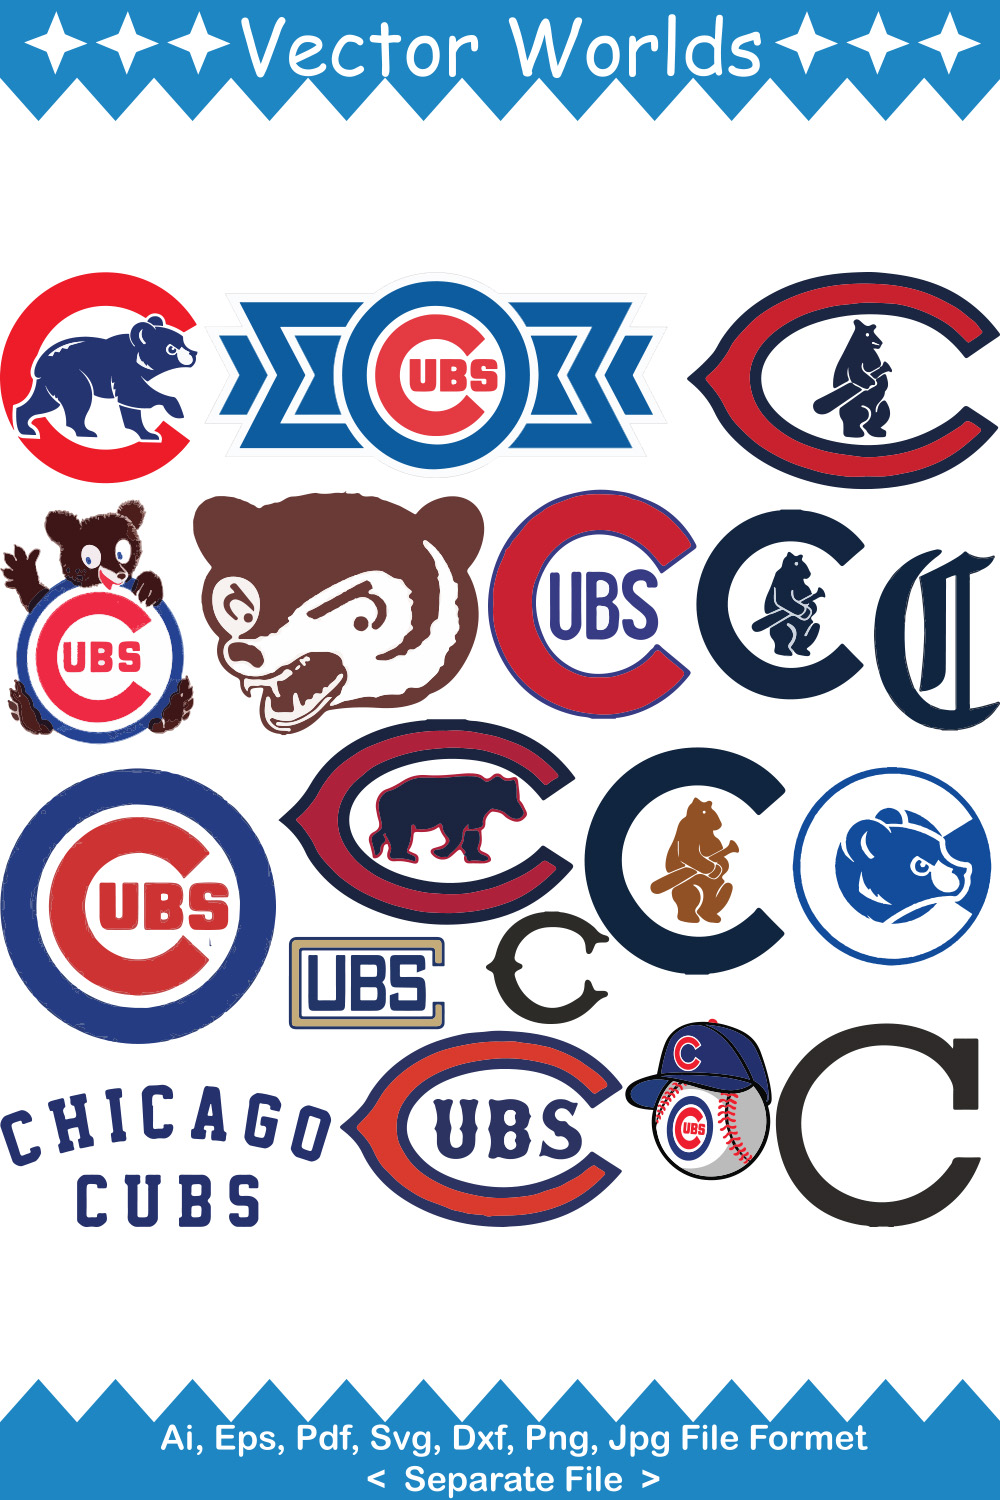 Chicago Cubs logo SVG Vector Design pinterest preview image.